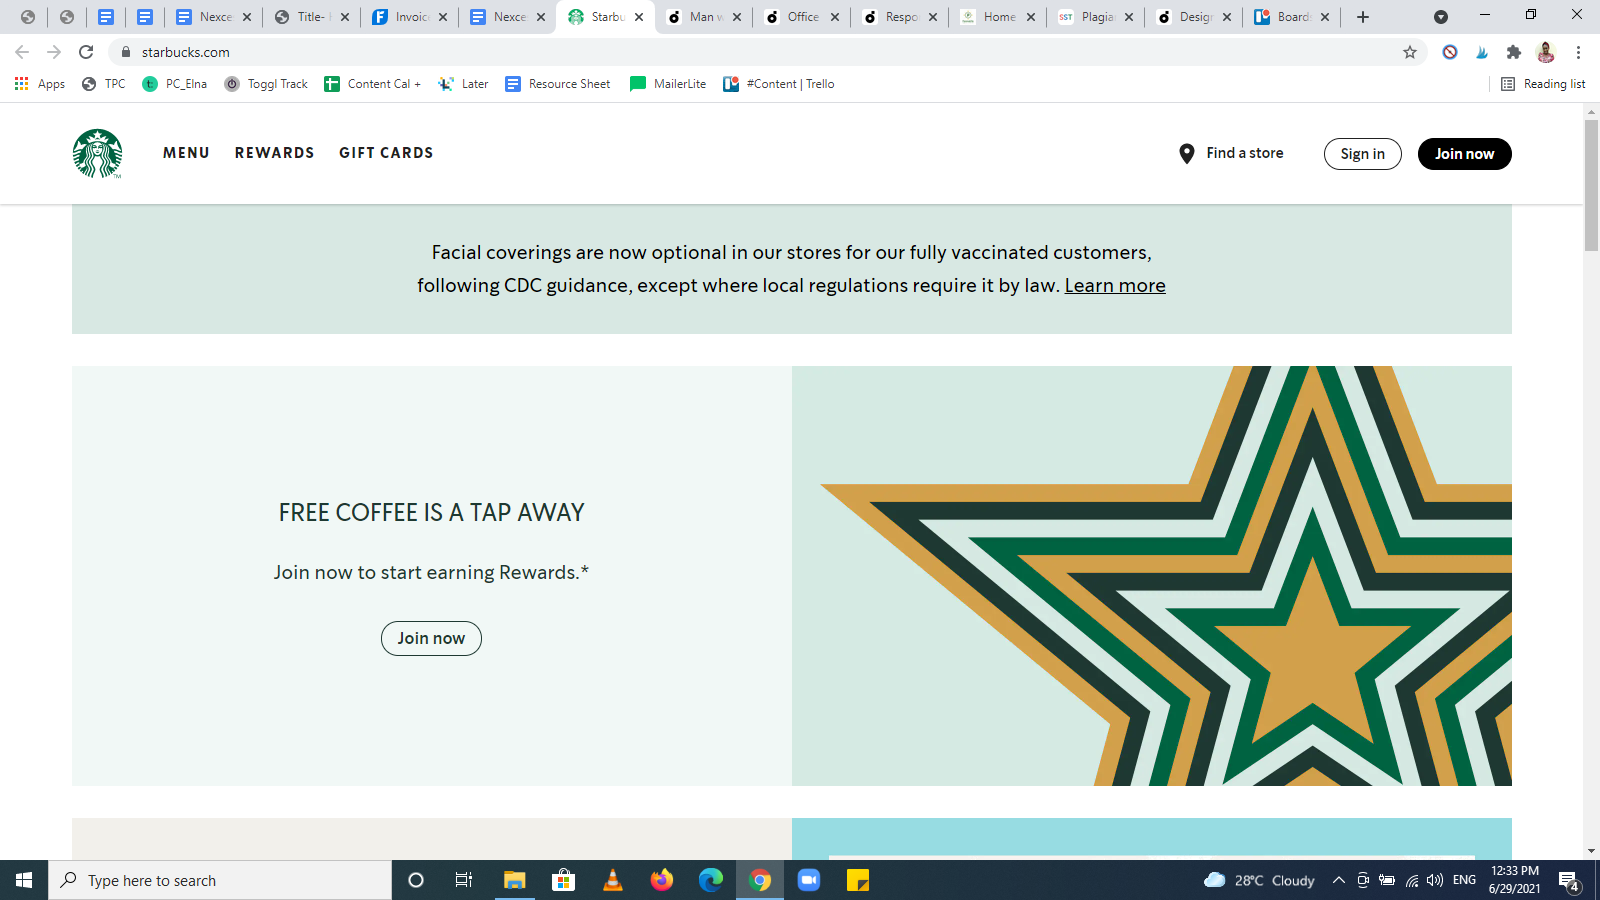 Starbucks’ homepage example